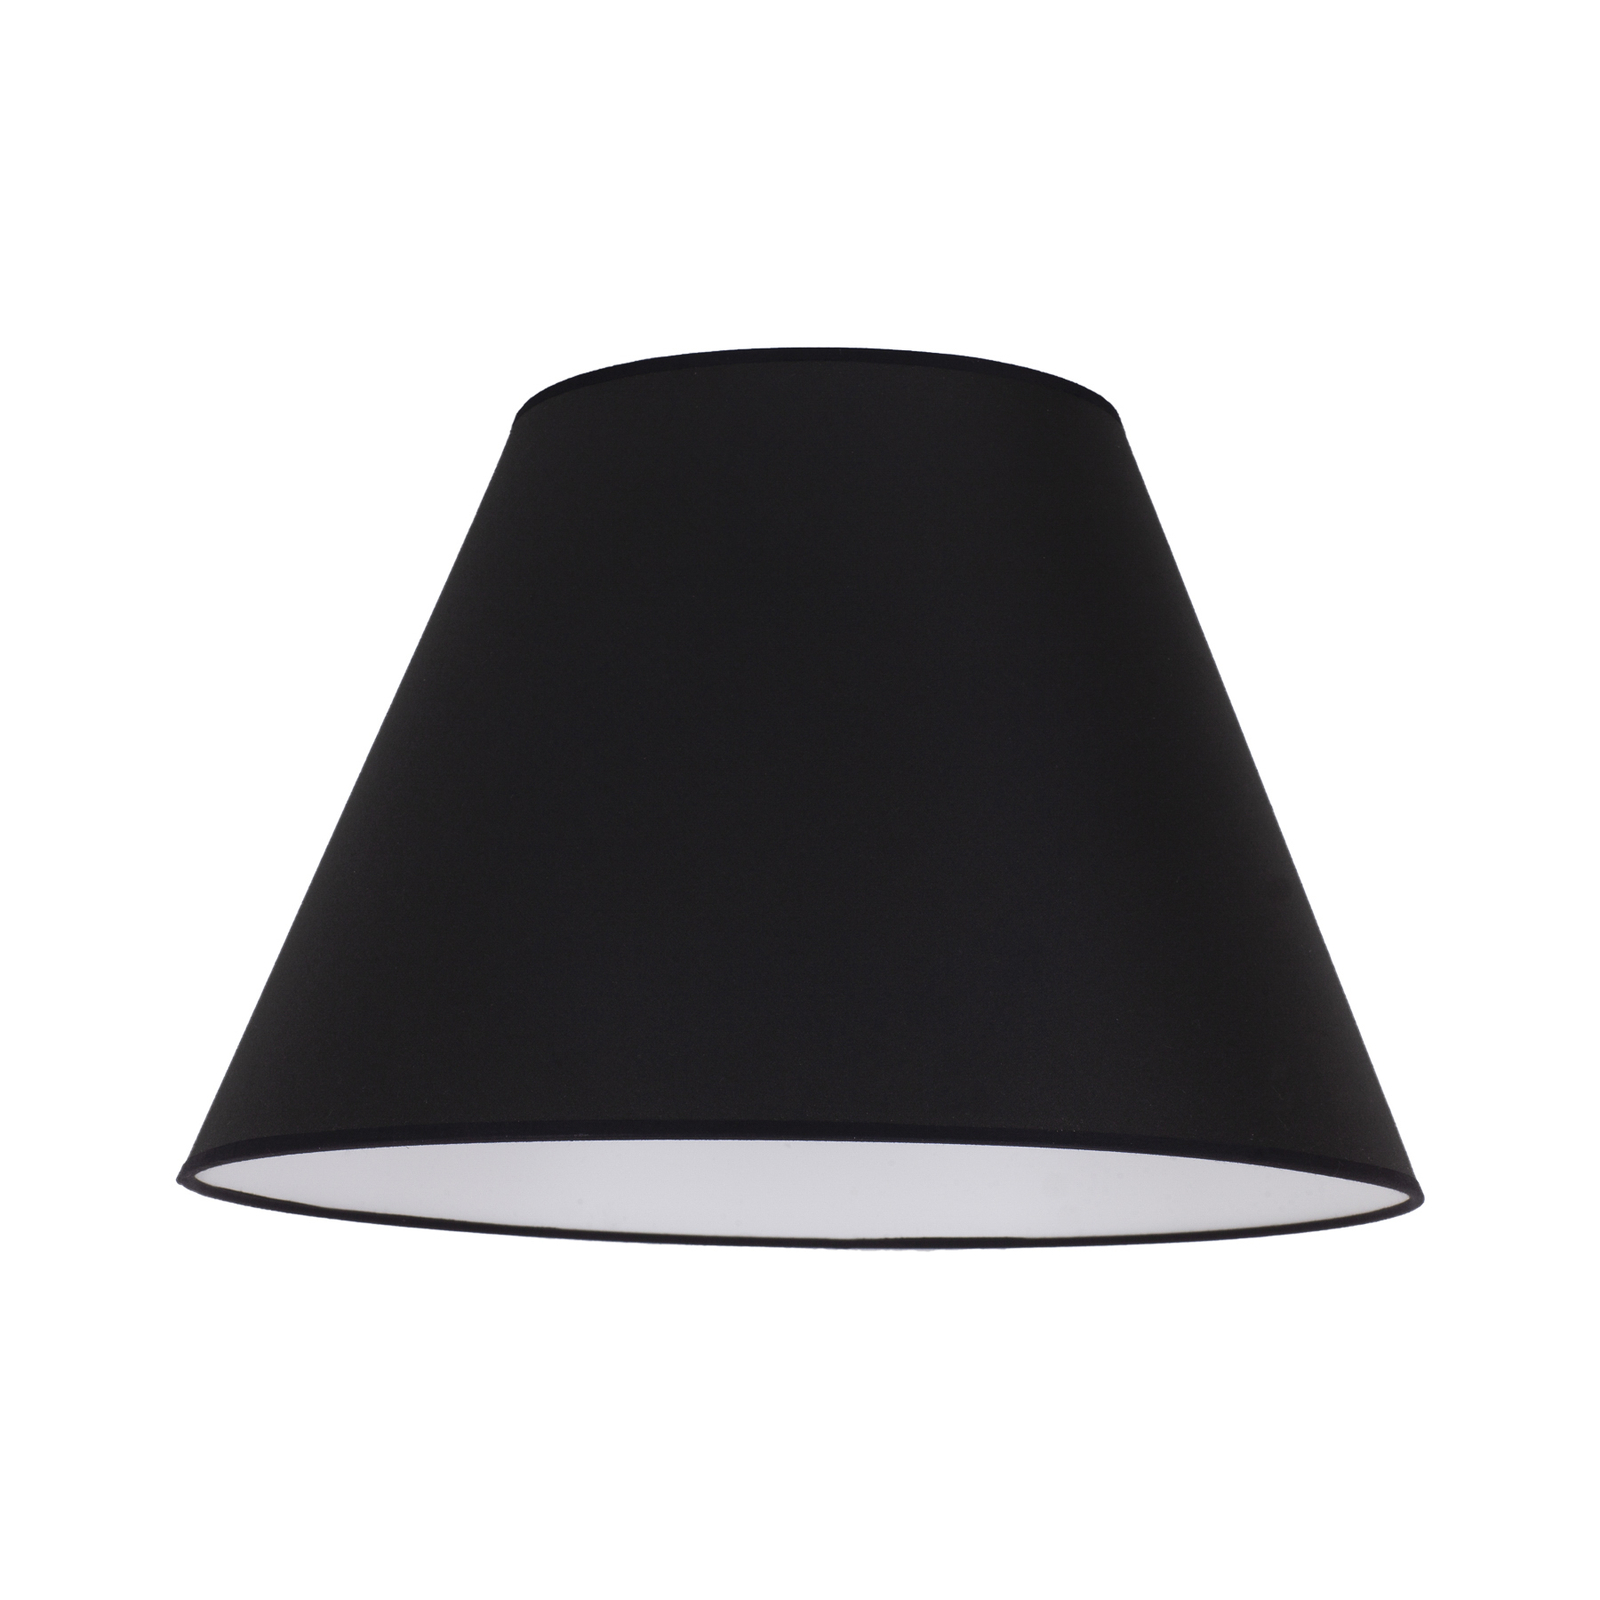 Sofia lampshade height 31 cm, black/white